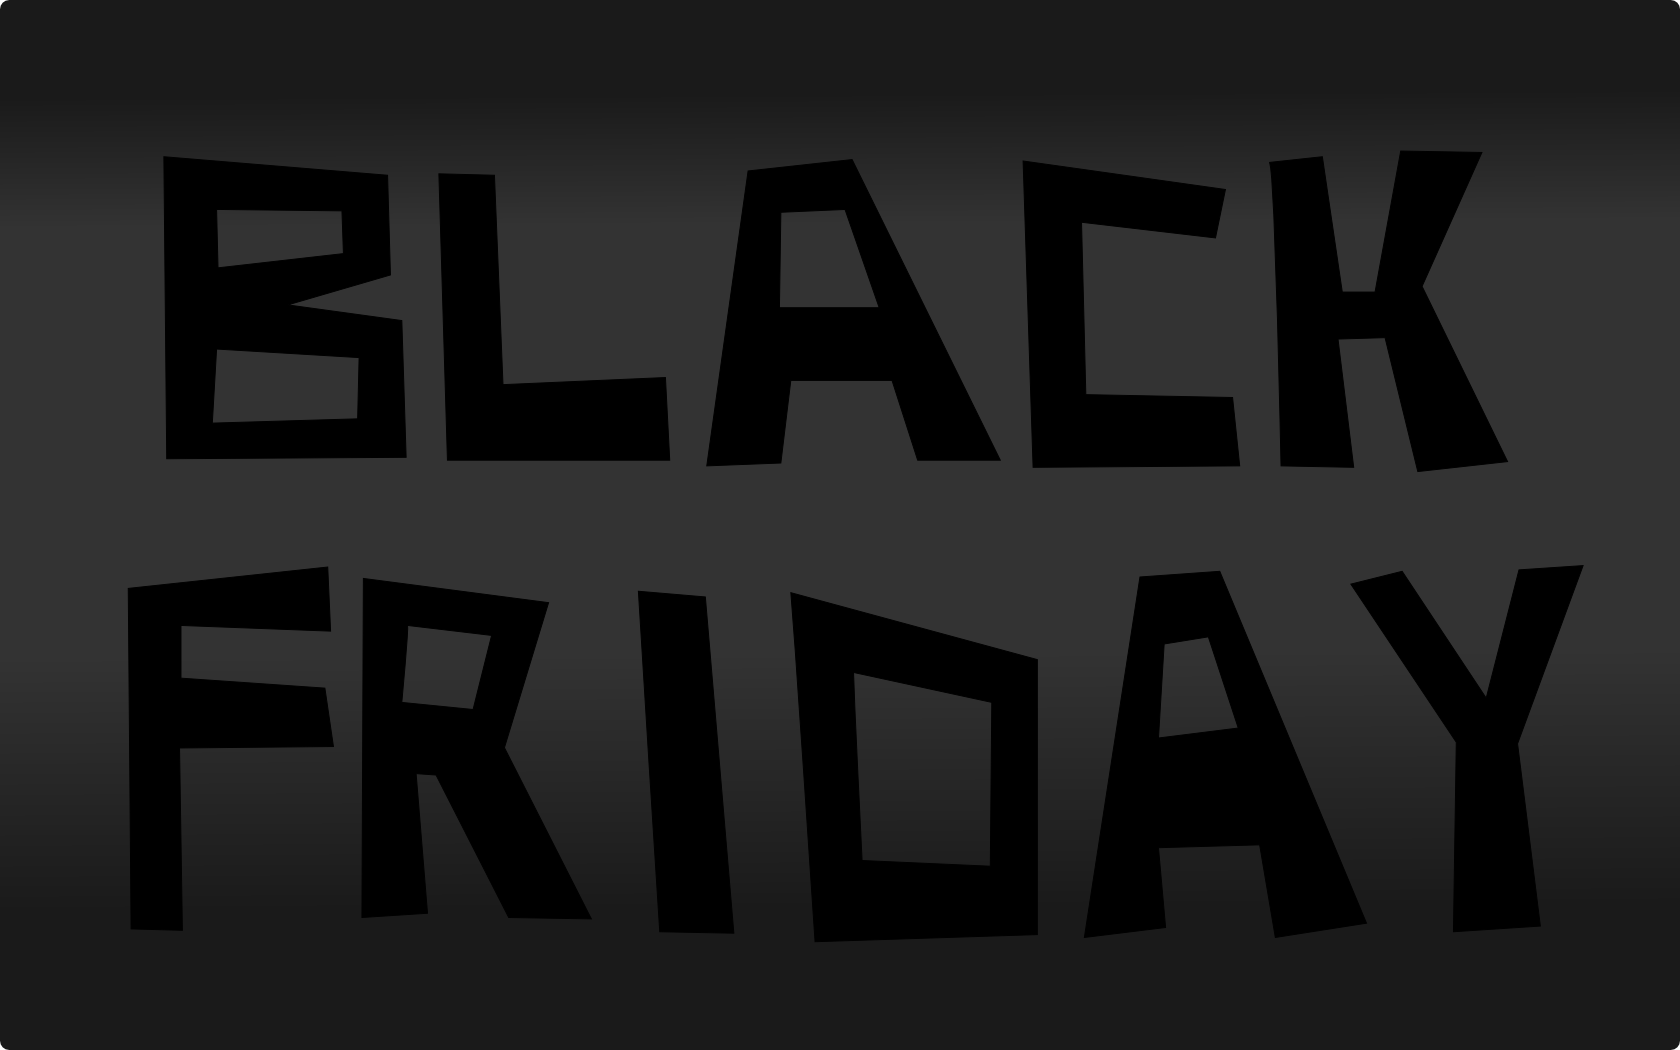 Black Friday Logo On A Black Background